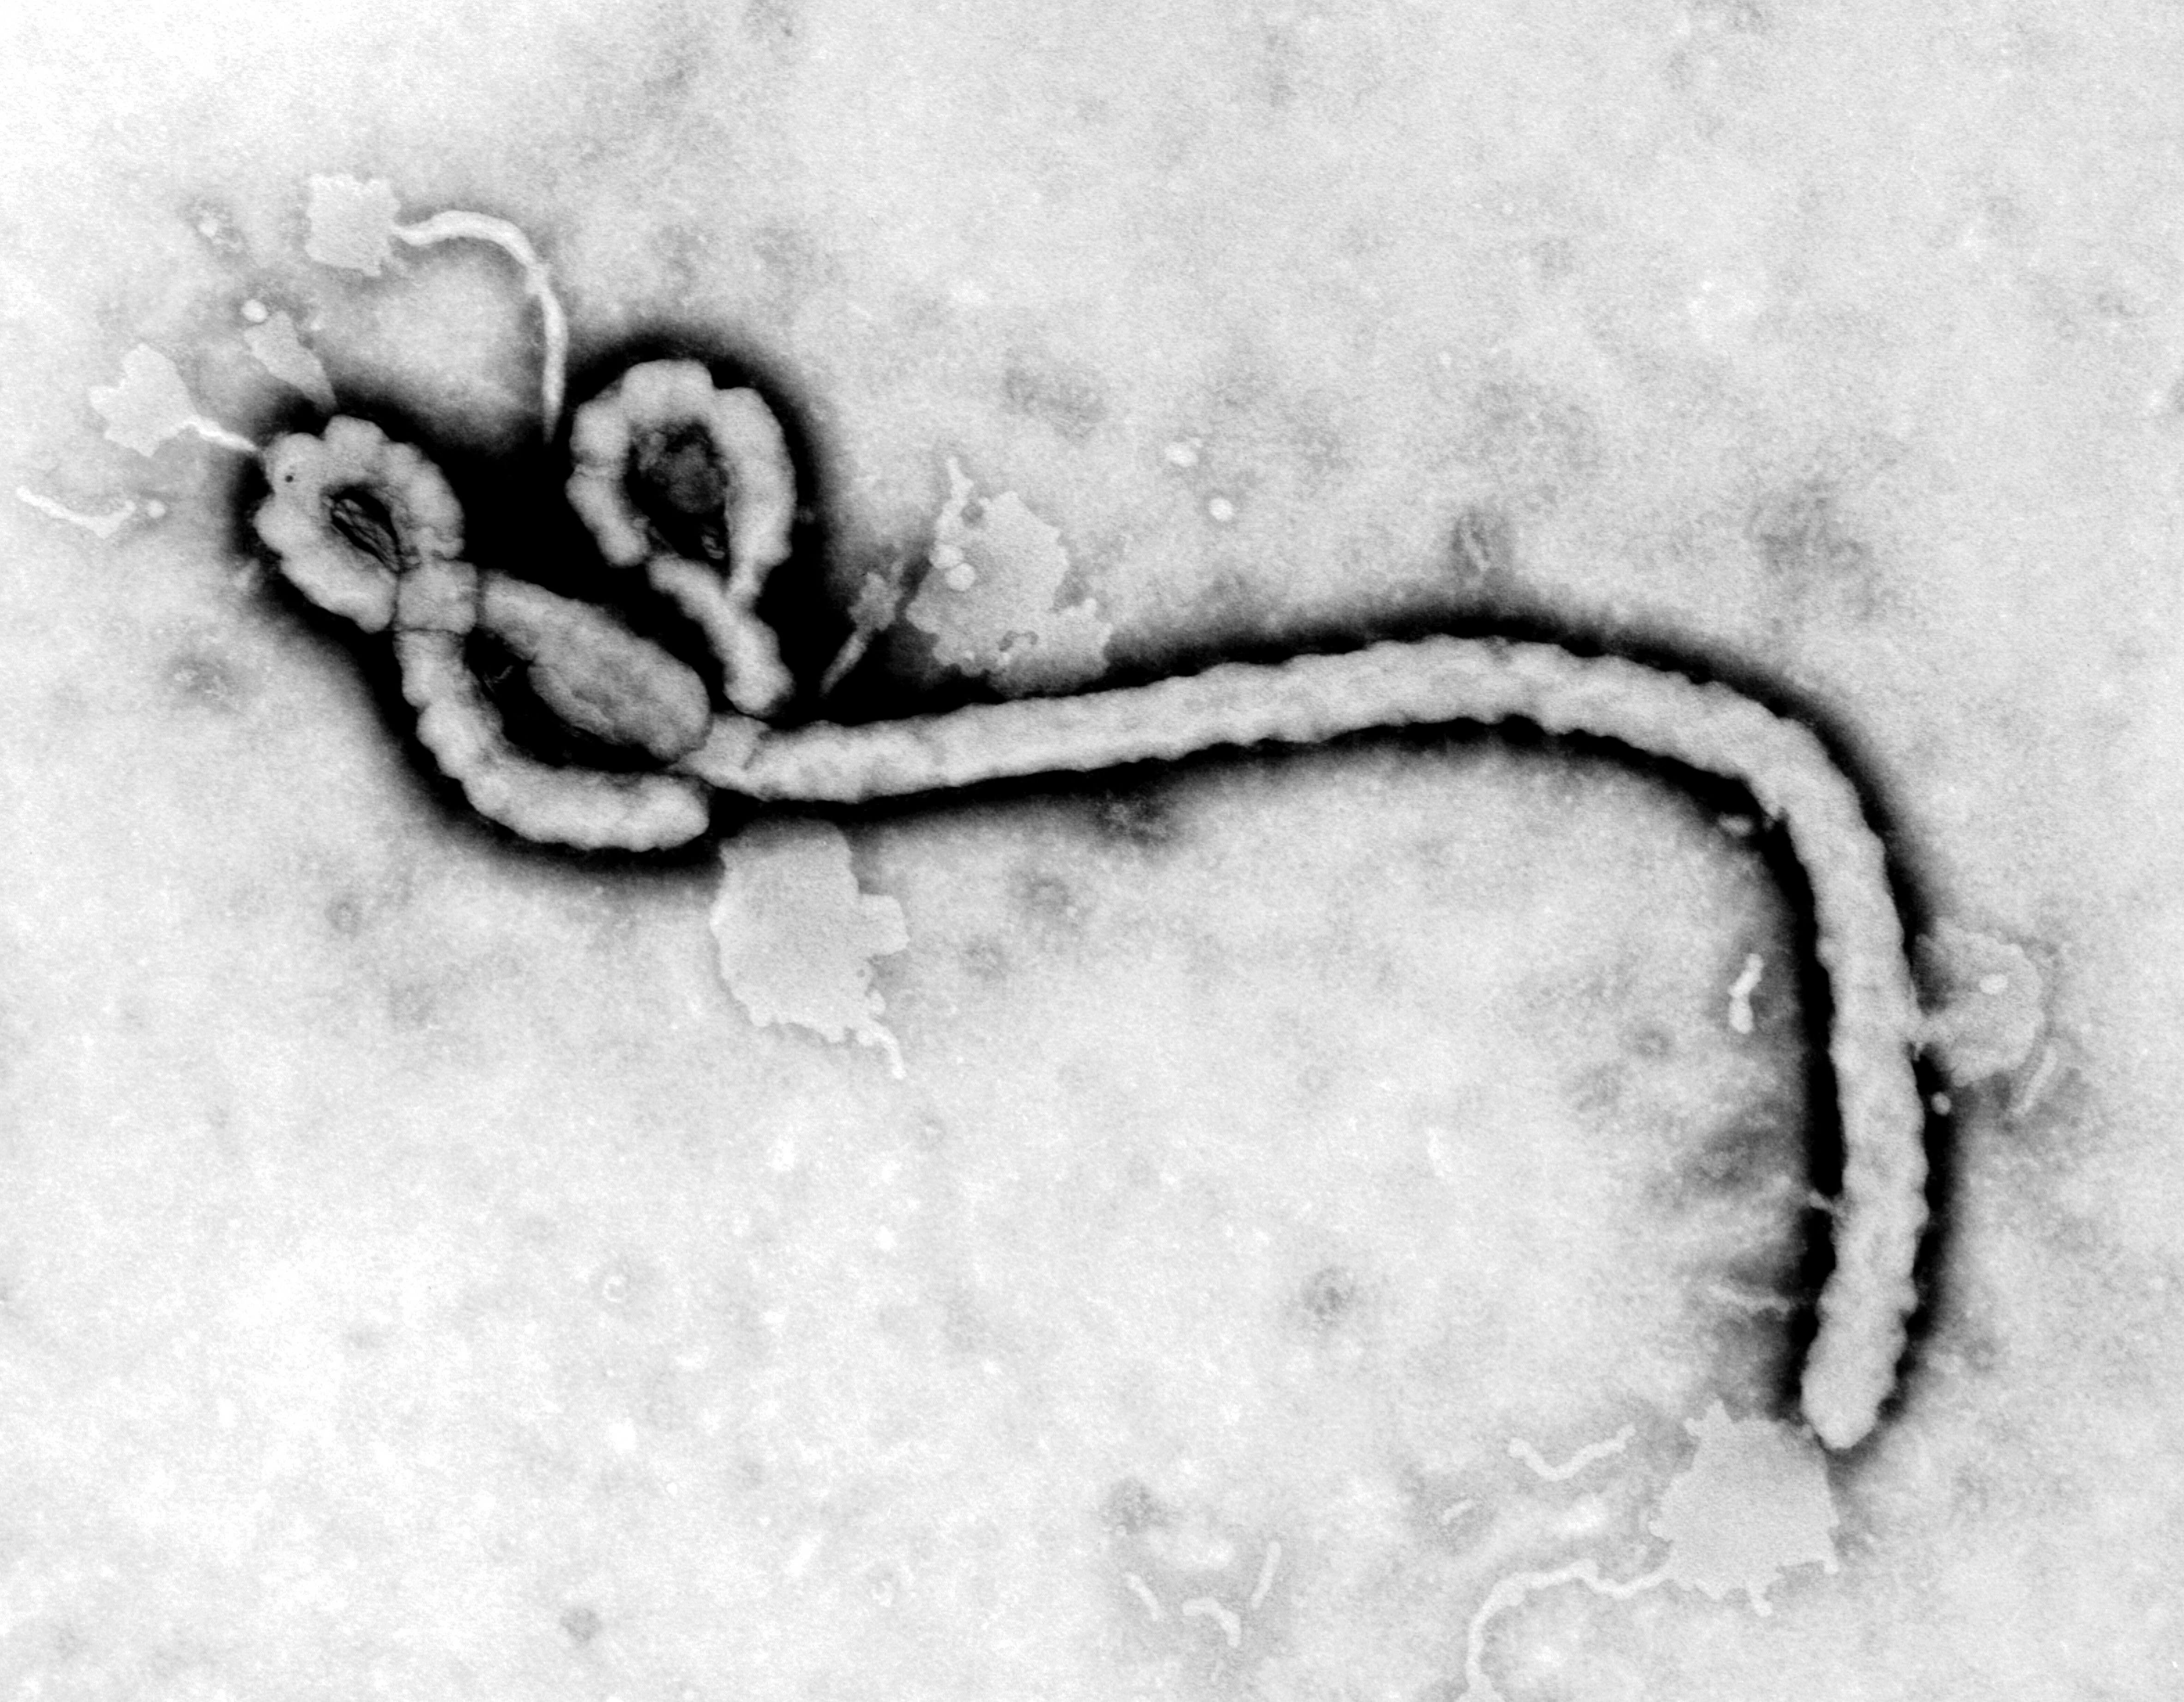 Transmission Electron Micrograph (TEM) of the Ebola virus